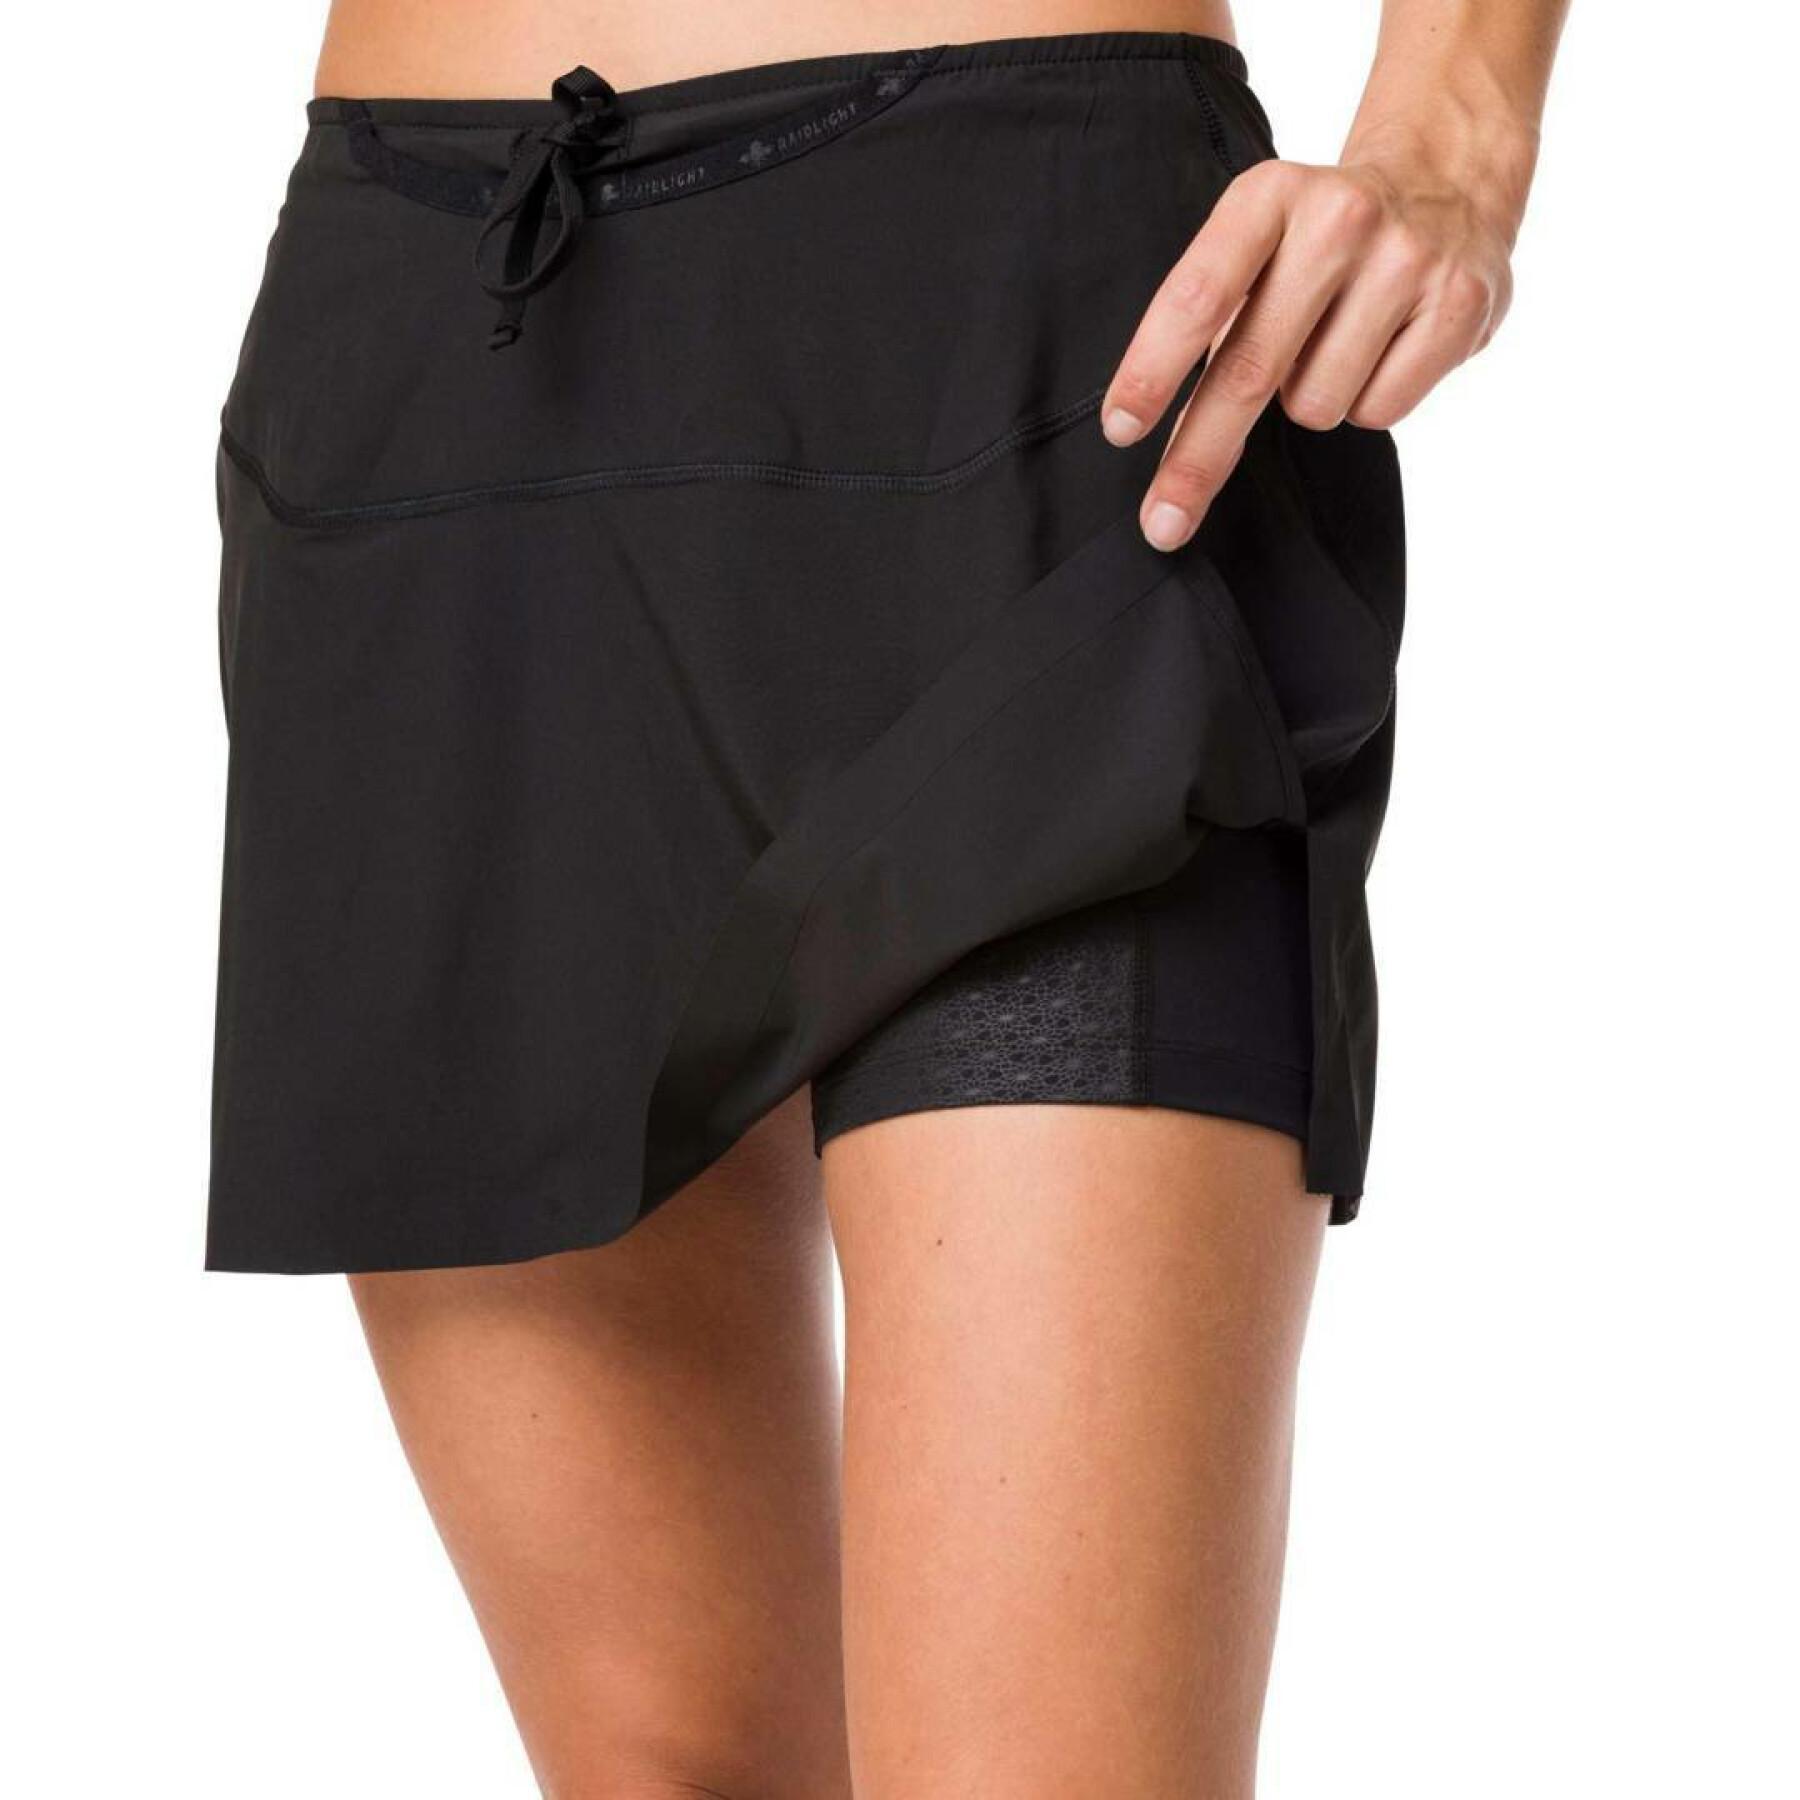 Dames shorts RaidLight responsiv